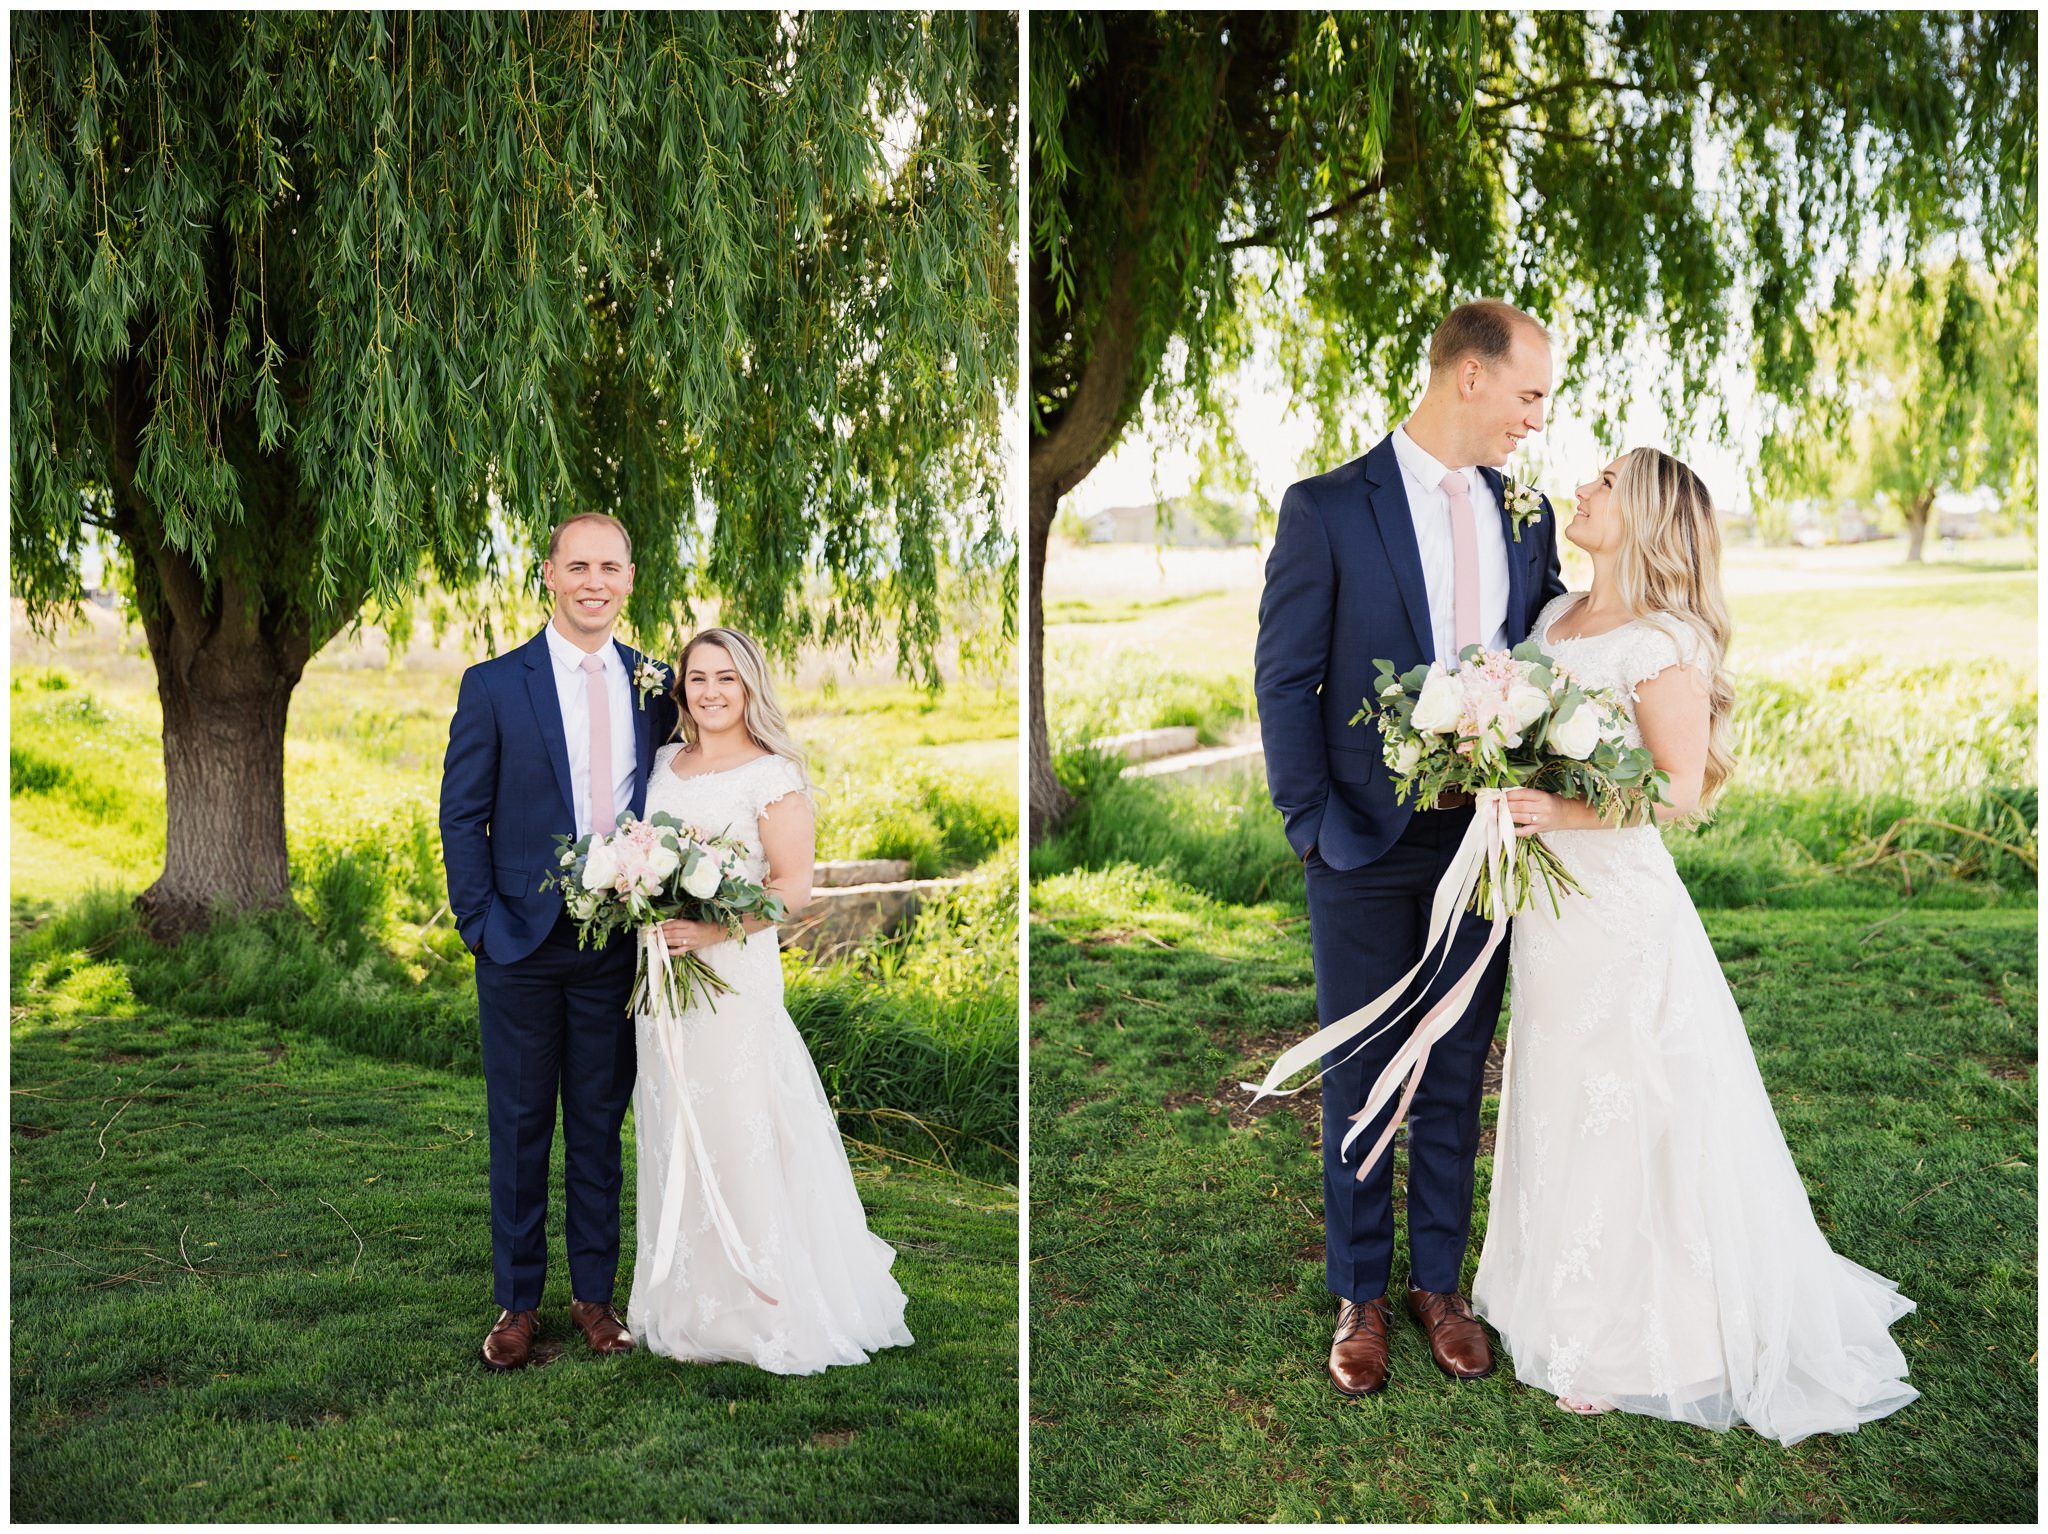 Wedding Formals/Bridals at Sleepy Ridge near a willow tree